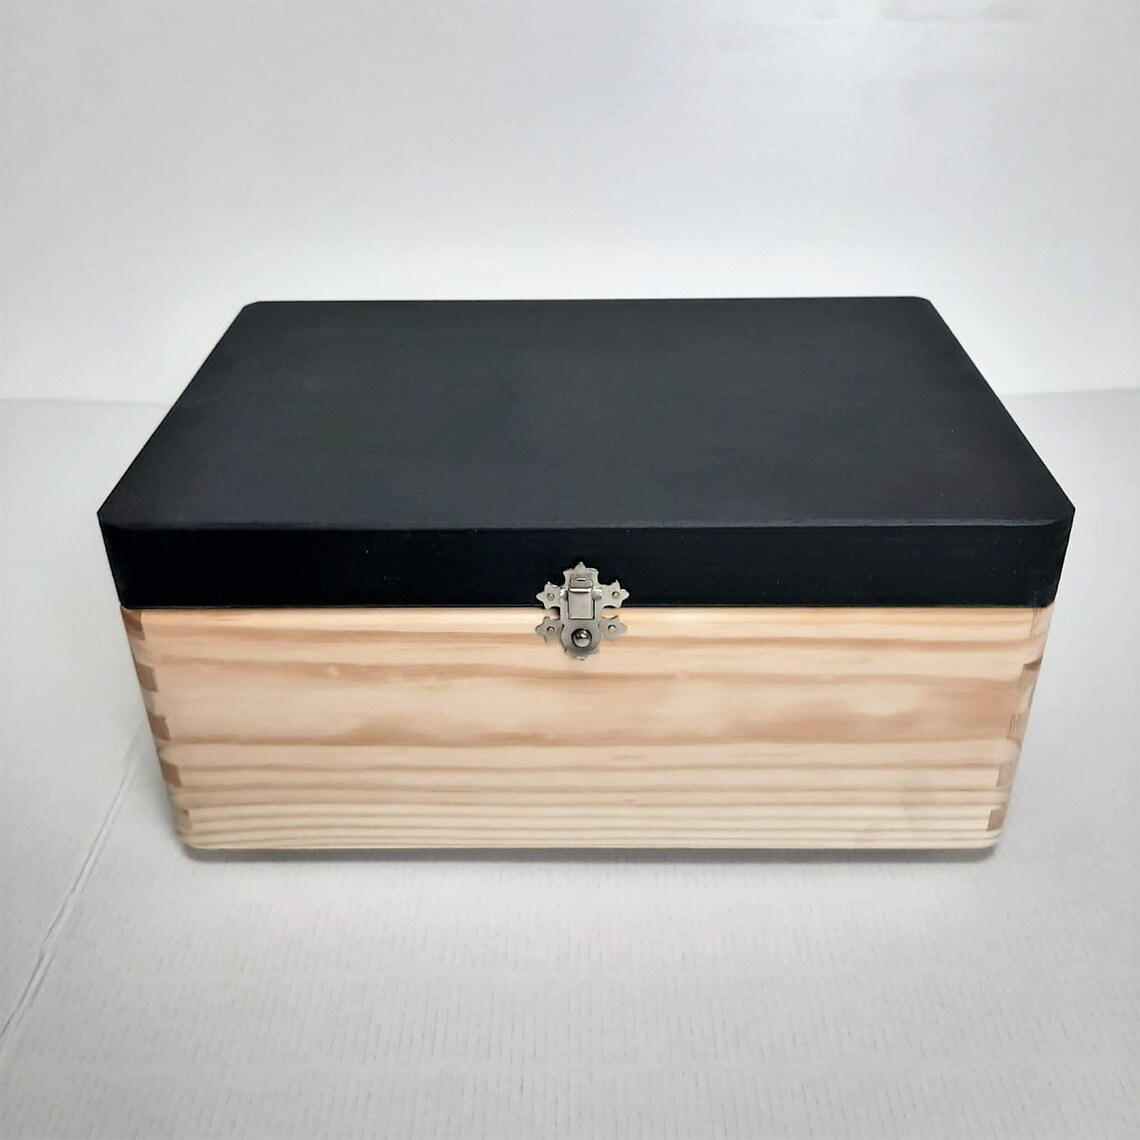 Wooden Storage Box With Chalk Painted Lid - 30cm x 20cm x 13cm